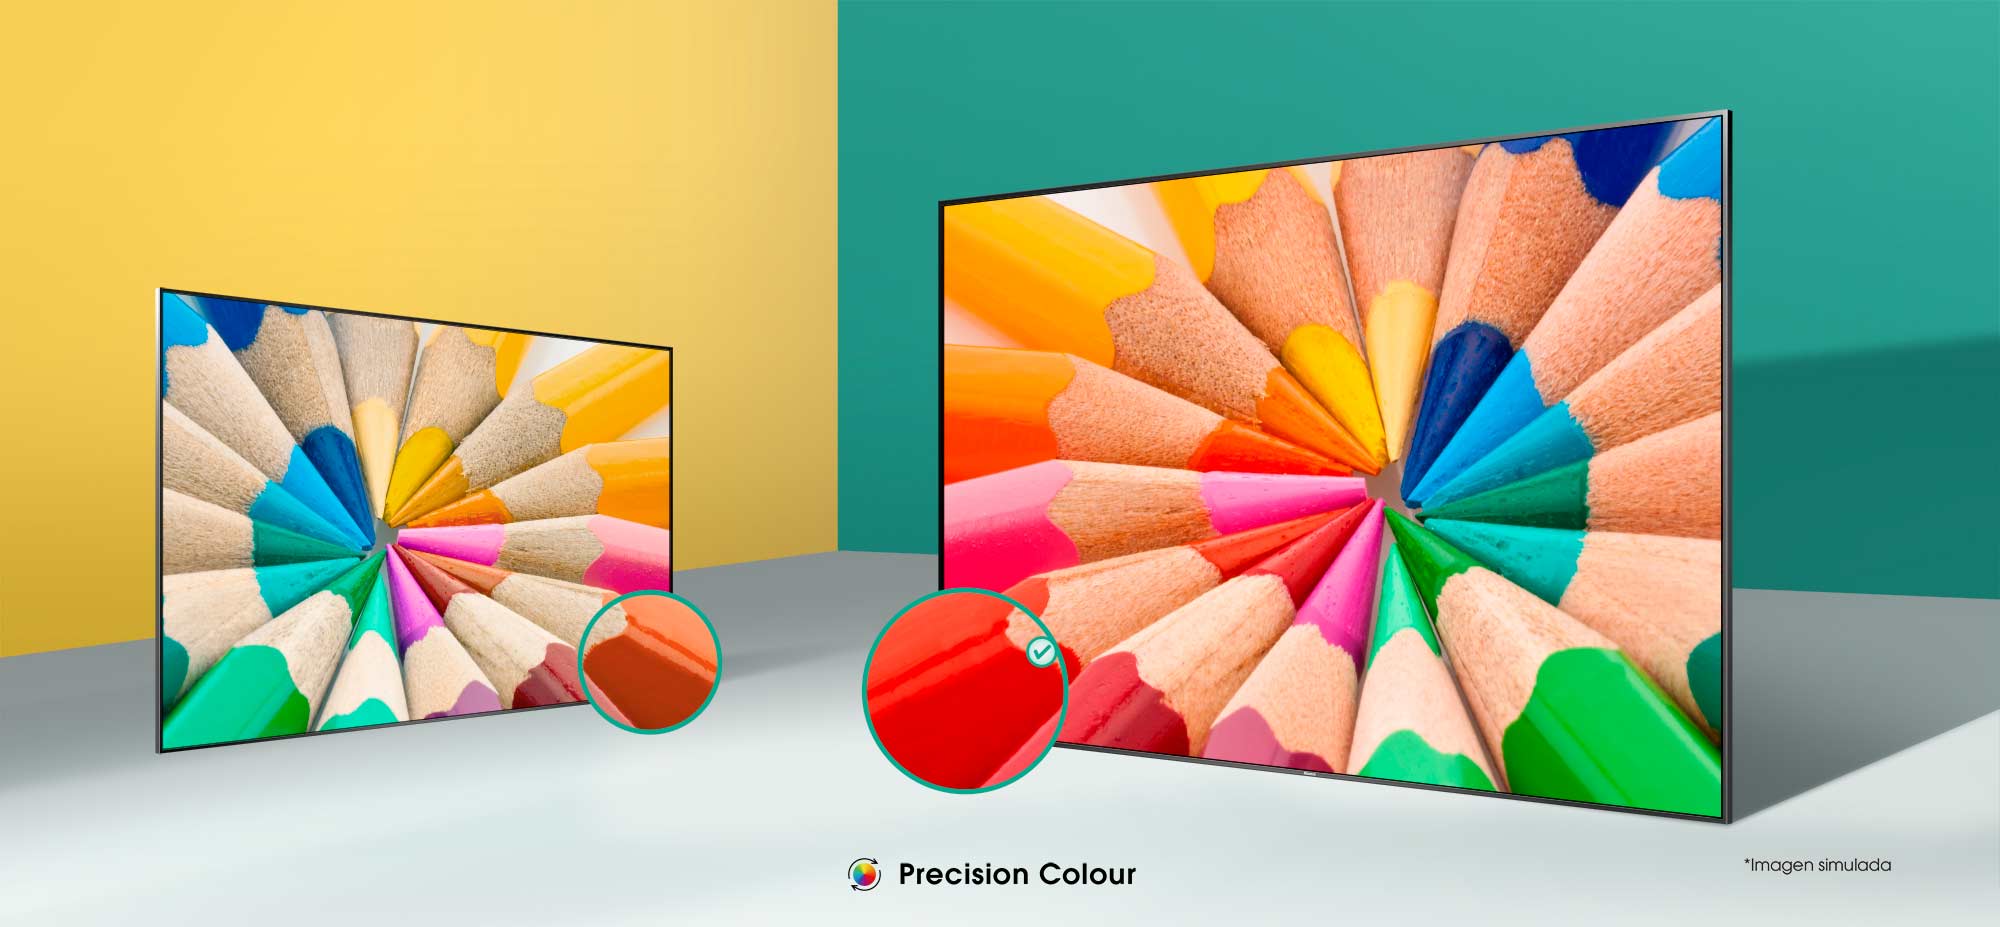 UHD TV Precision Colour Hisense